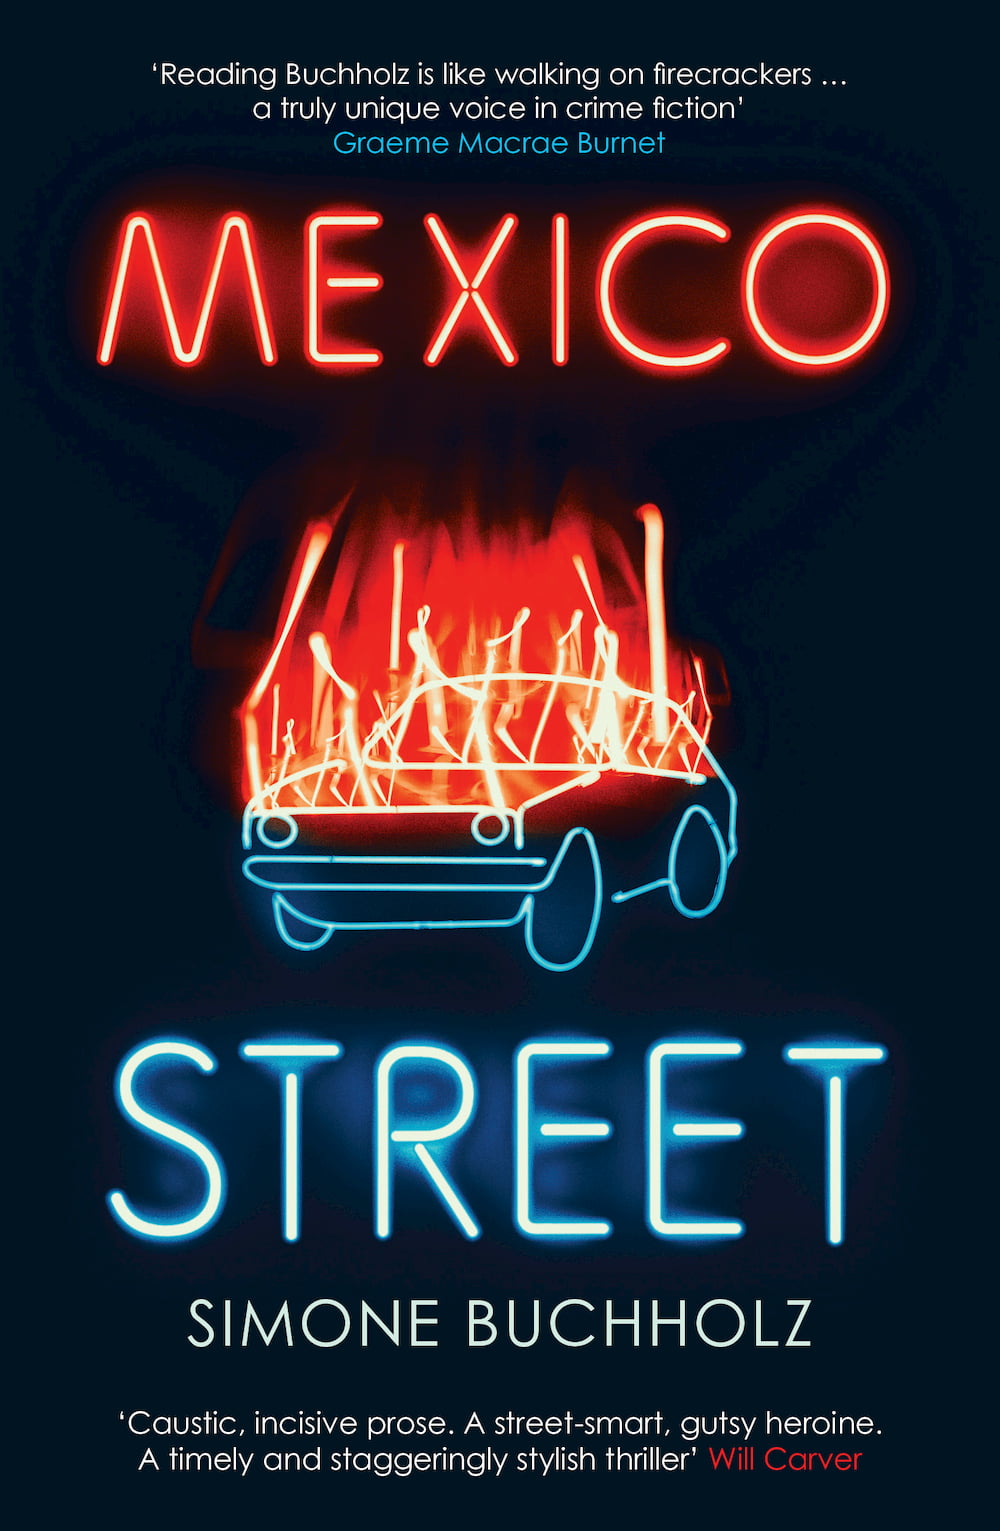 Mexico Street by Simone Buchholz book cover